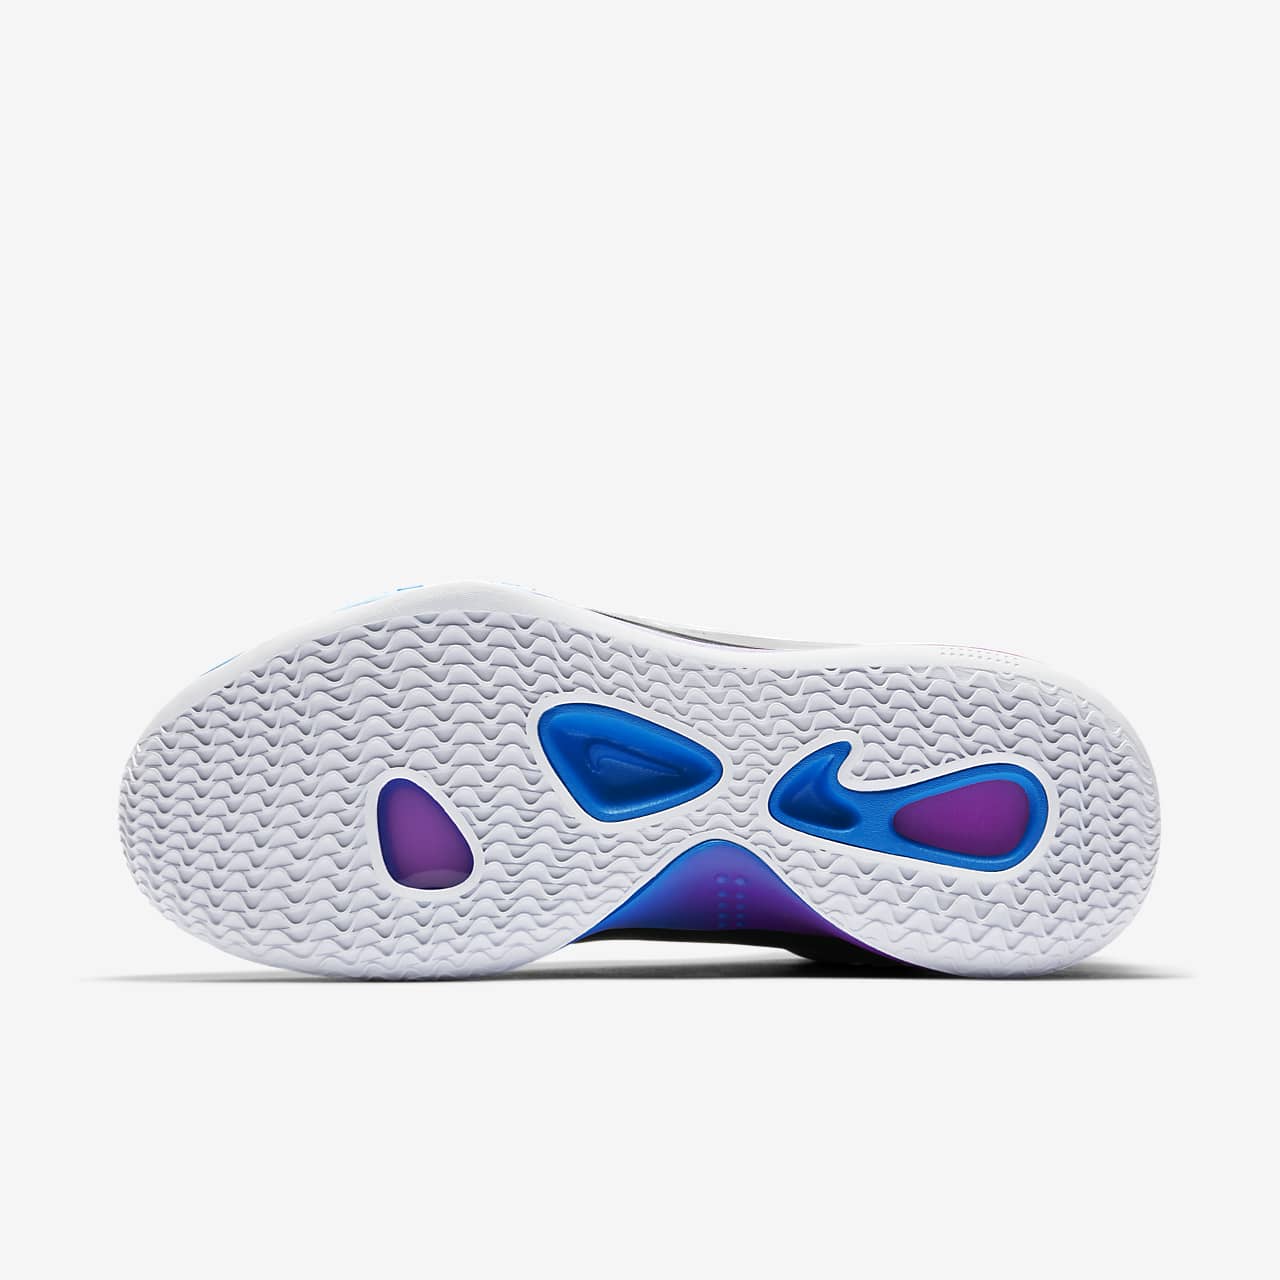 Nike Hyperdunk X Low Basketball Shoe